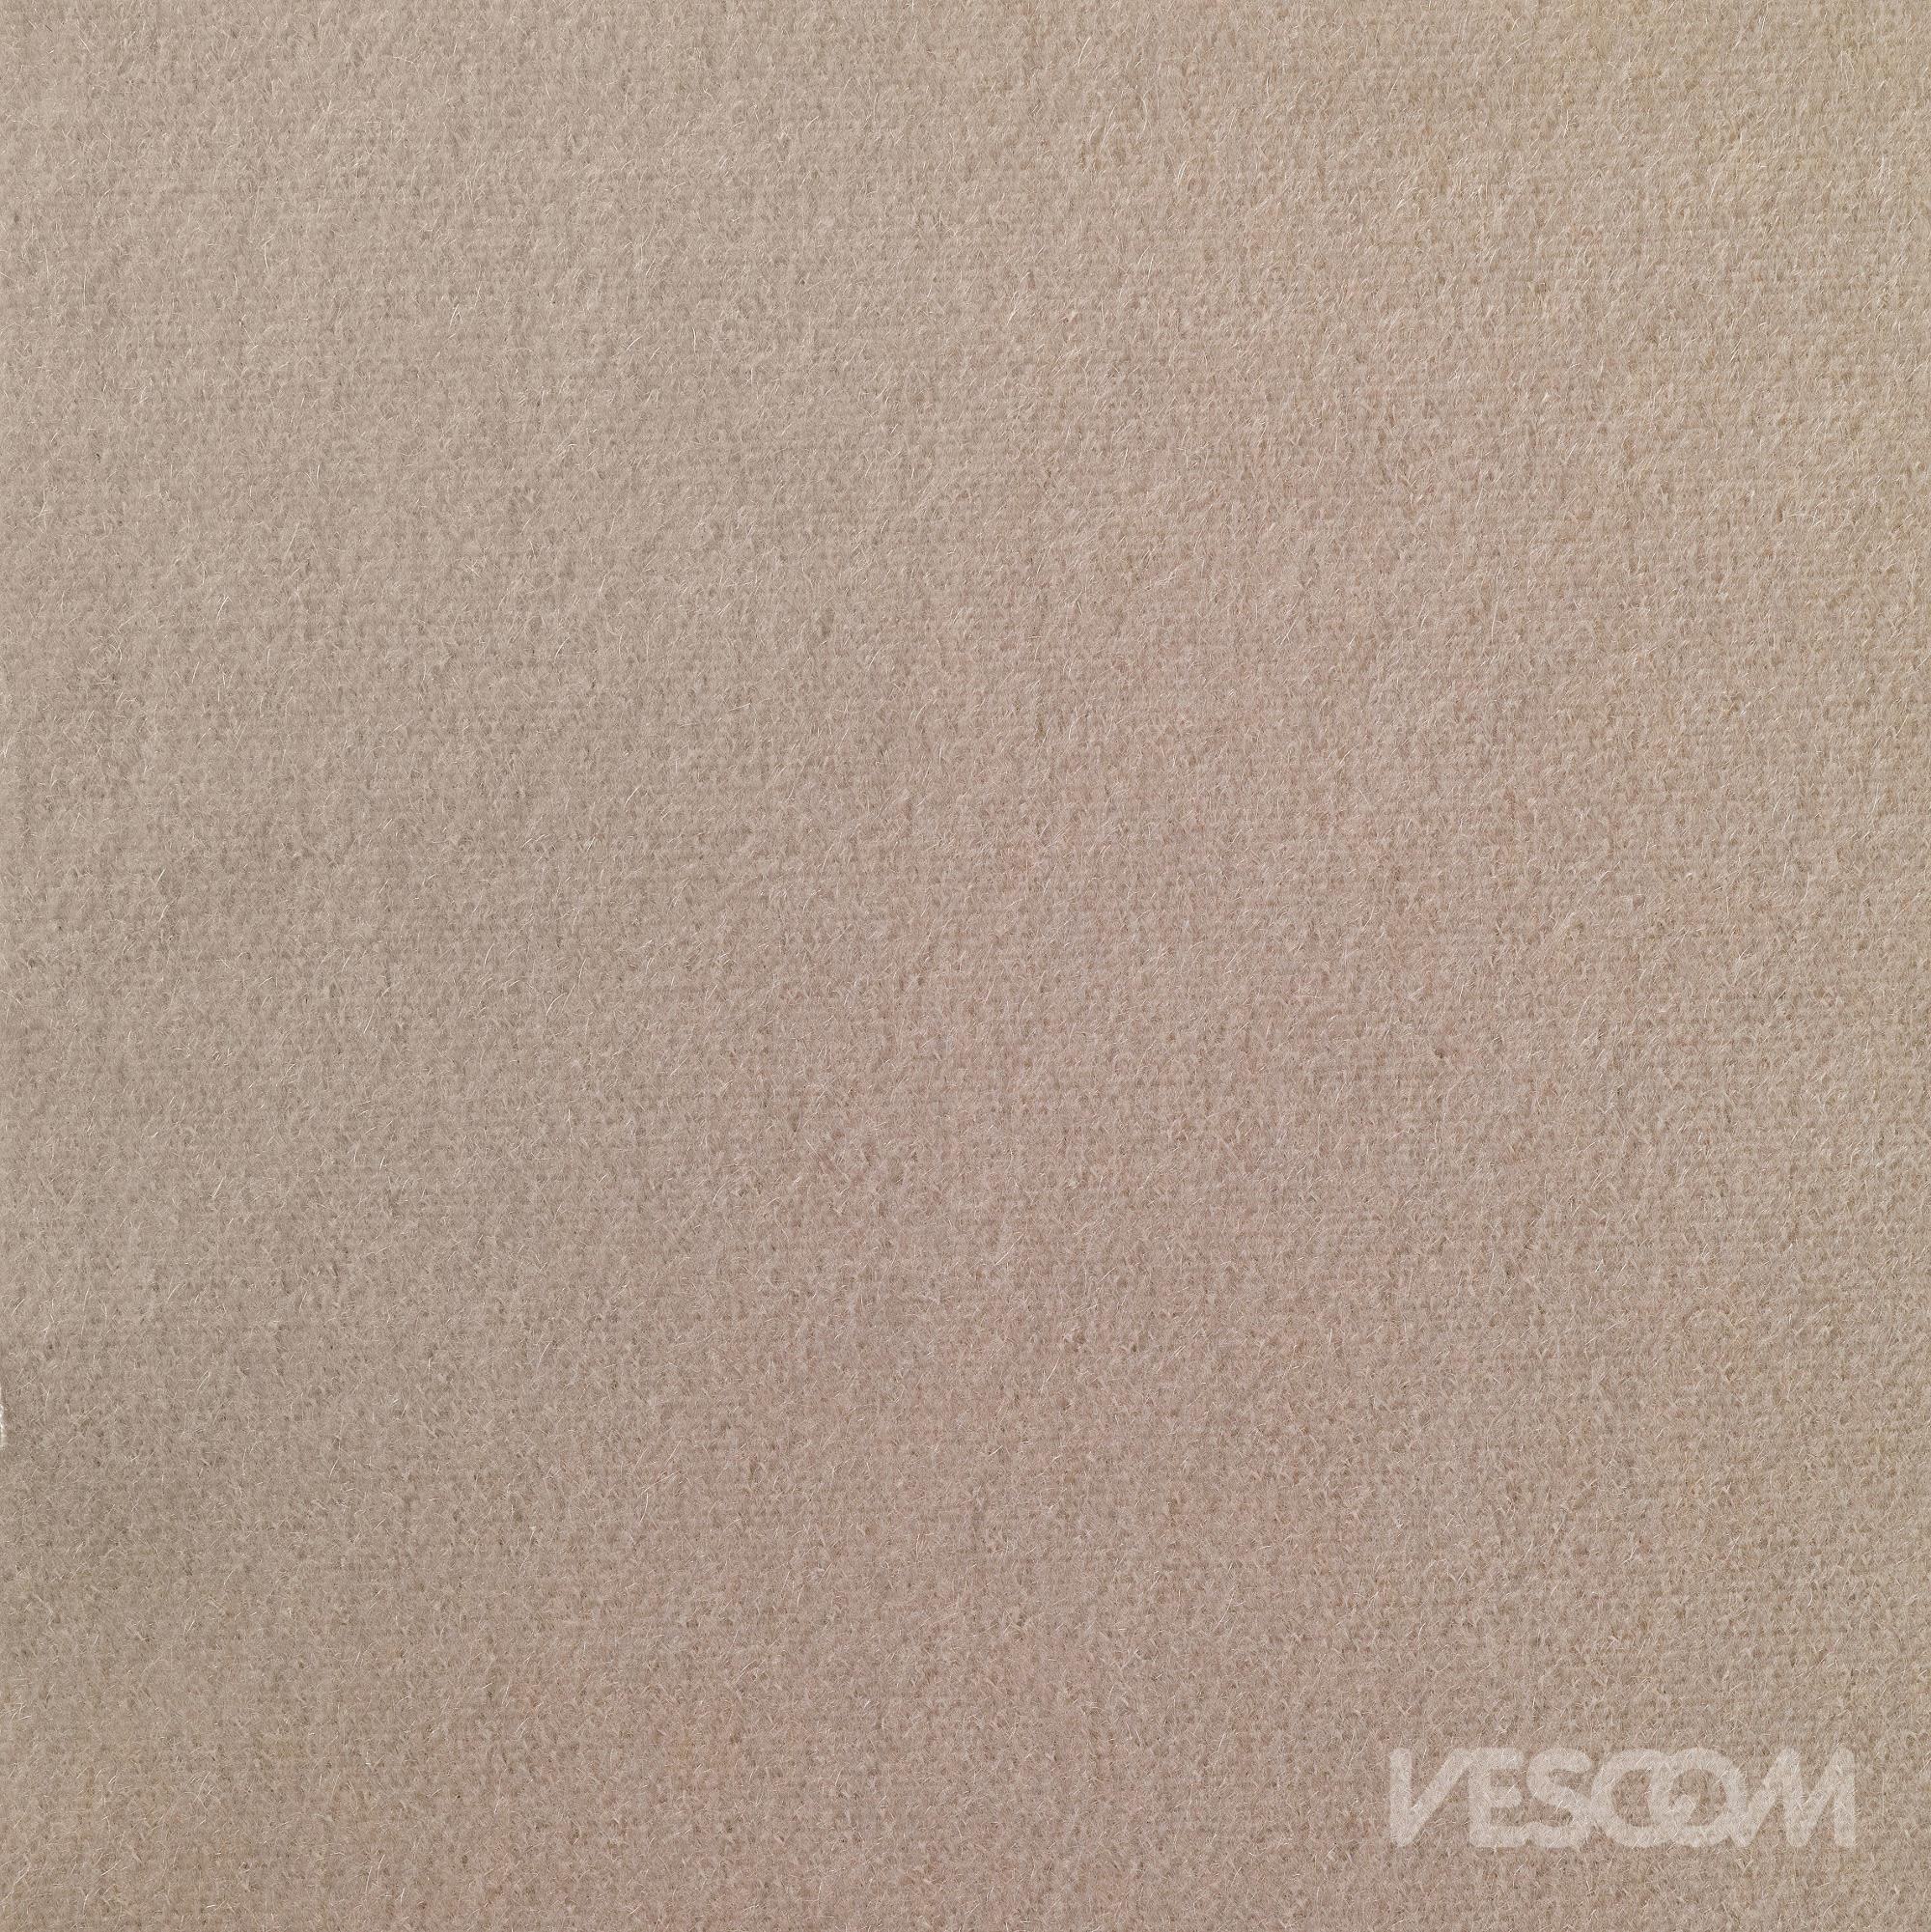 Vescom Ariana Upholstery Fabric 7061.24